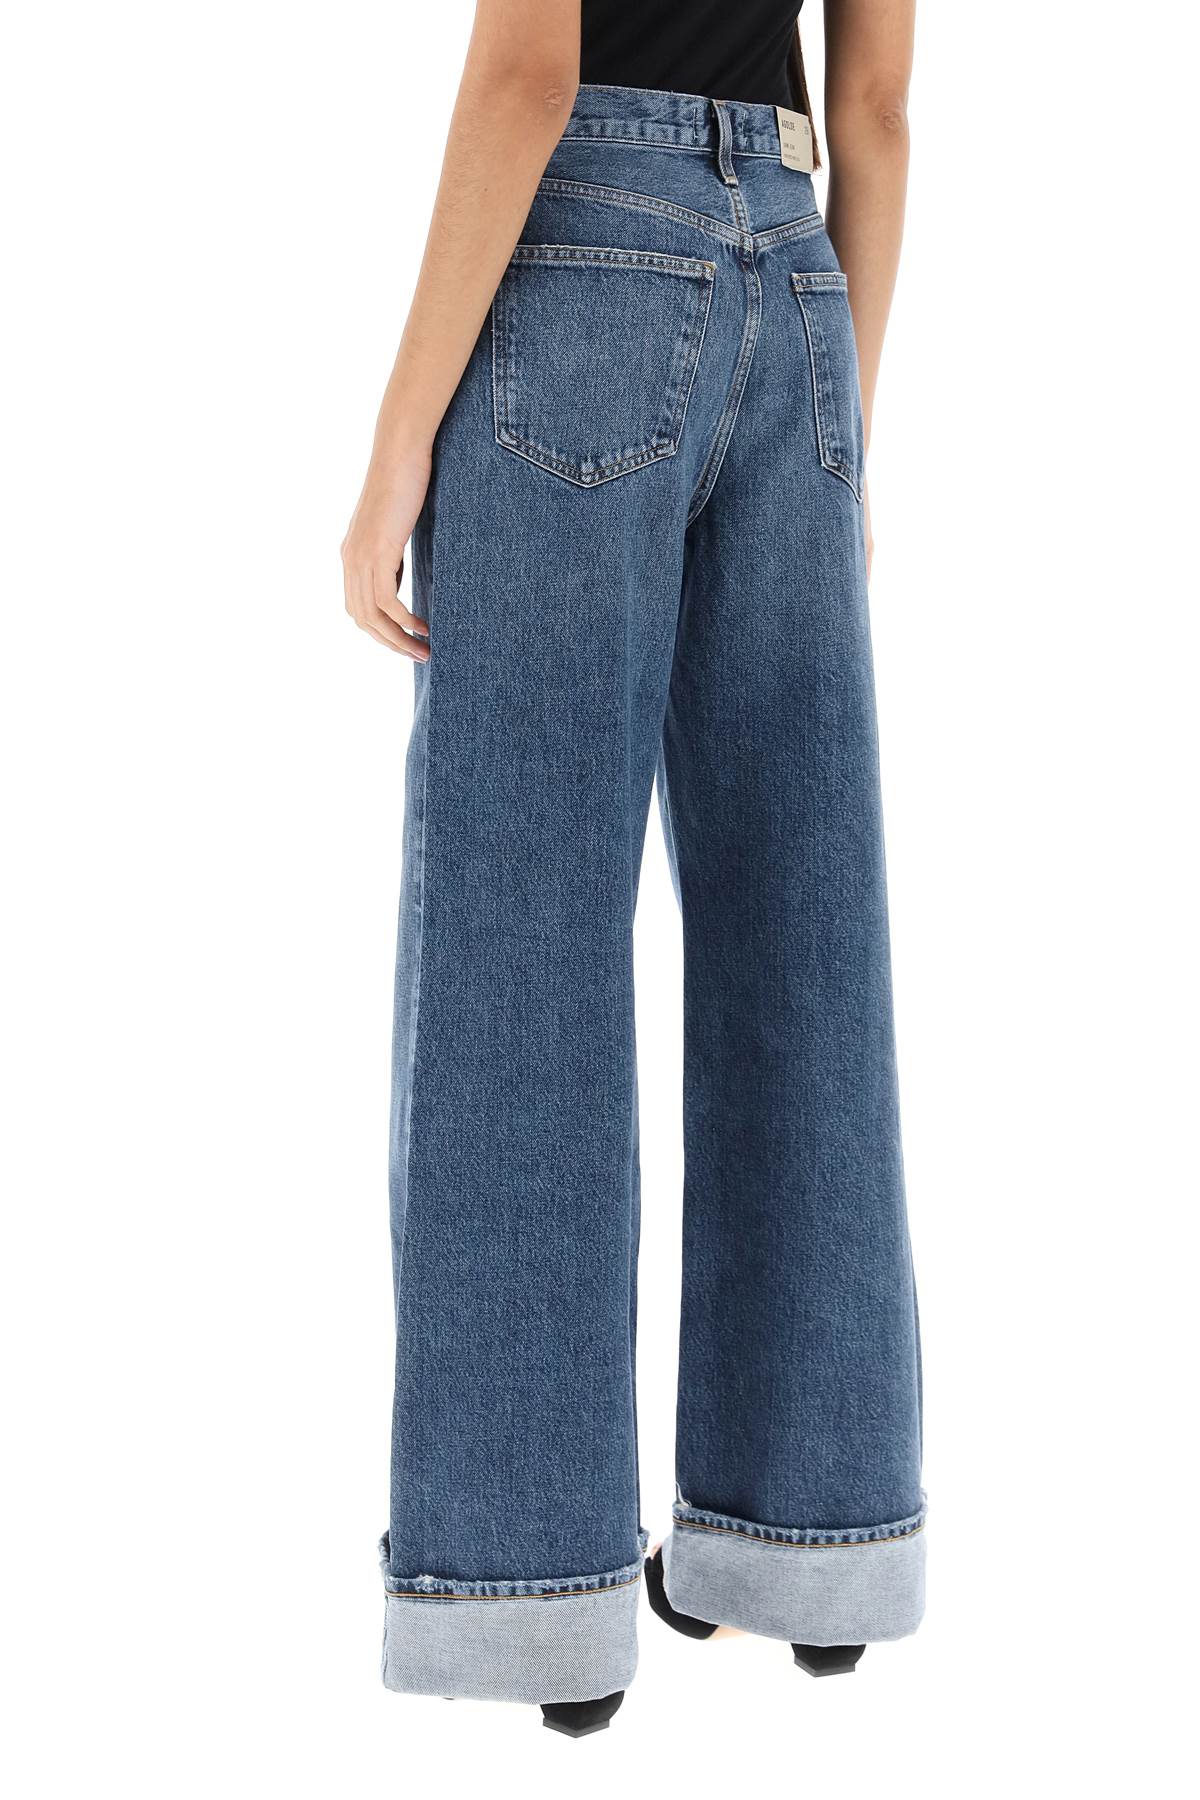 Agolde dame wide leg jeans-2